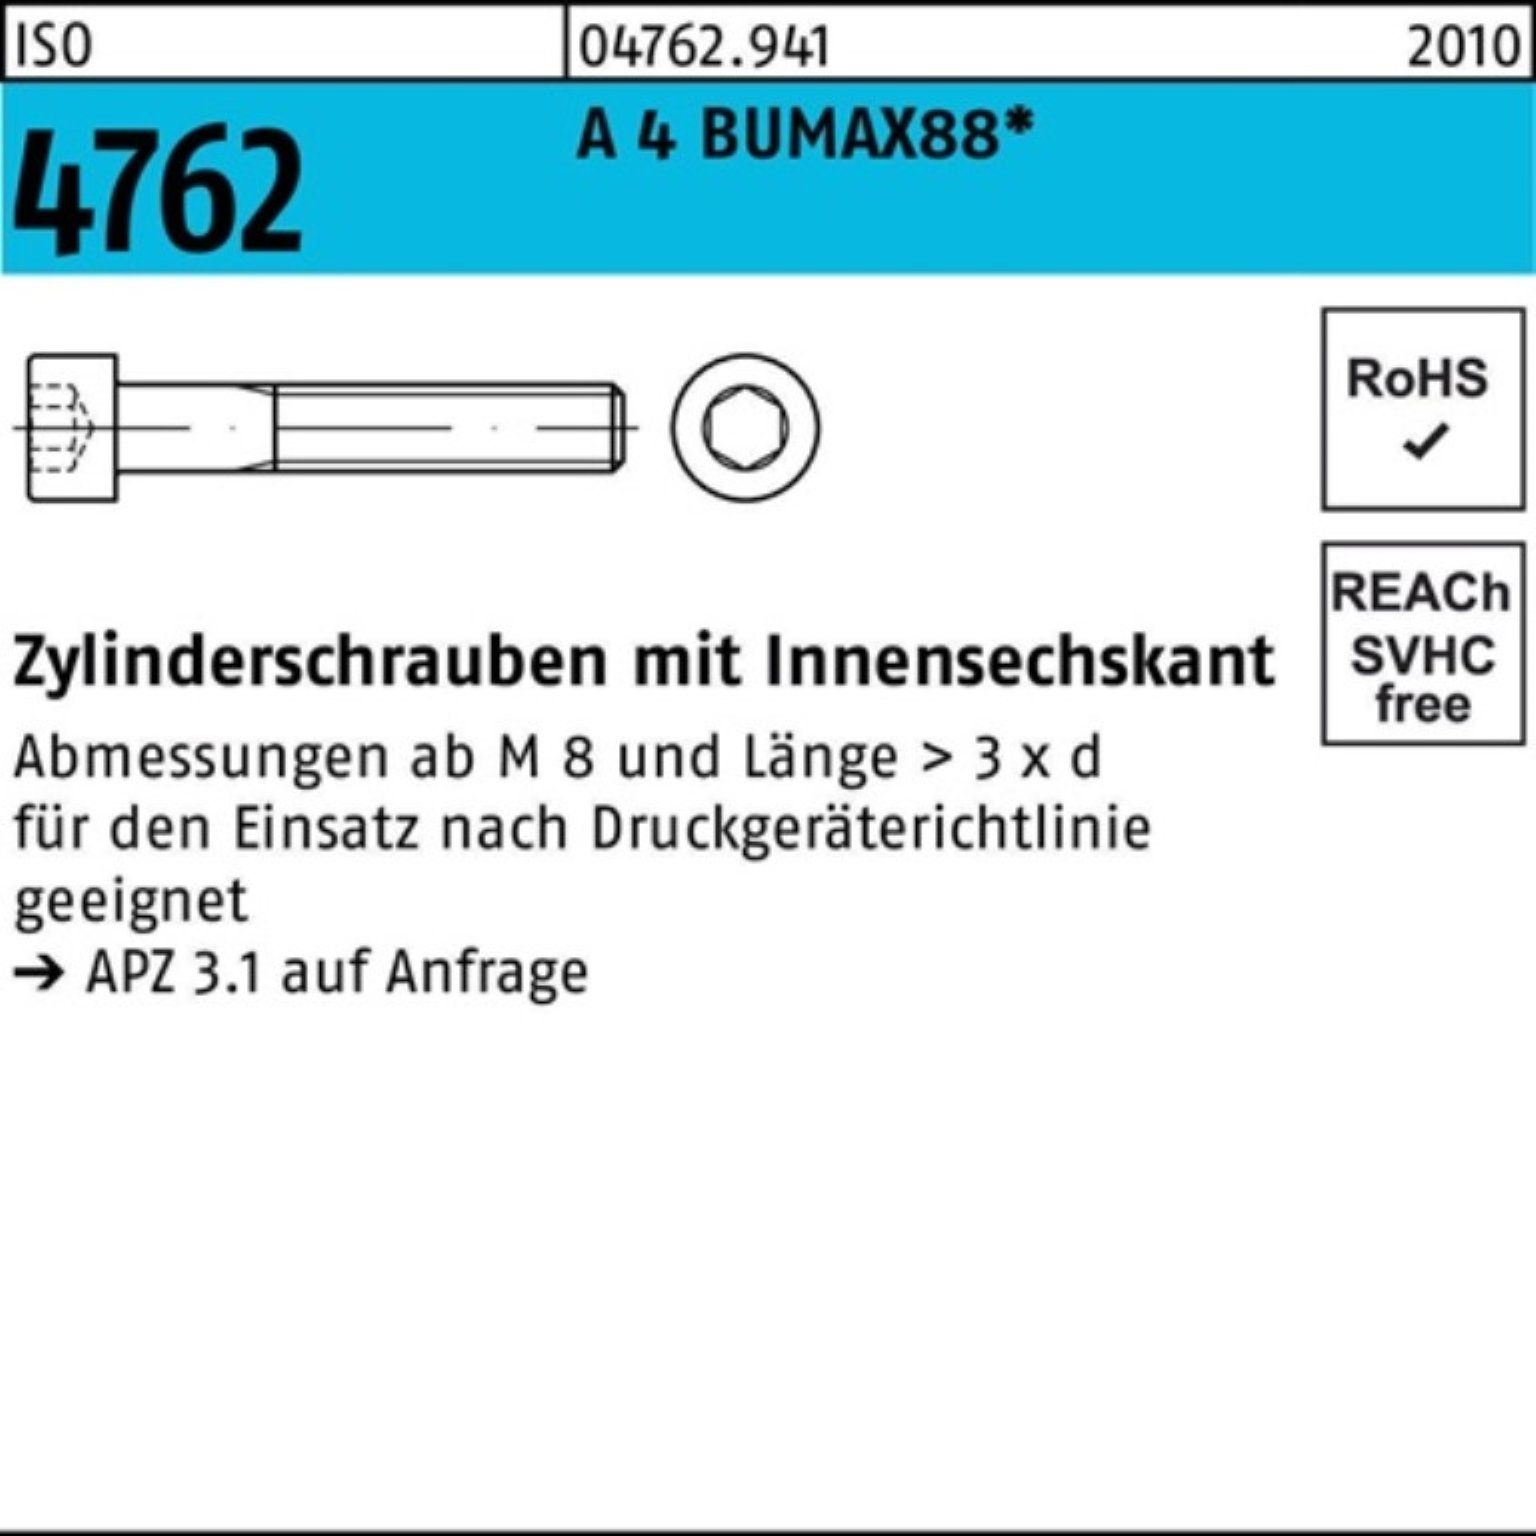 BUMAX88 Bufab 100 Pack ISO M6x Zylinderschraube A 50 4762 Innen-6kt Zylinderschraube 100er 4